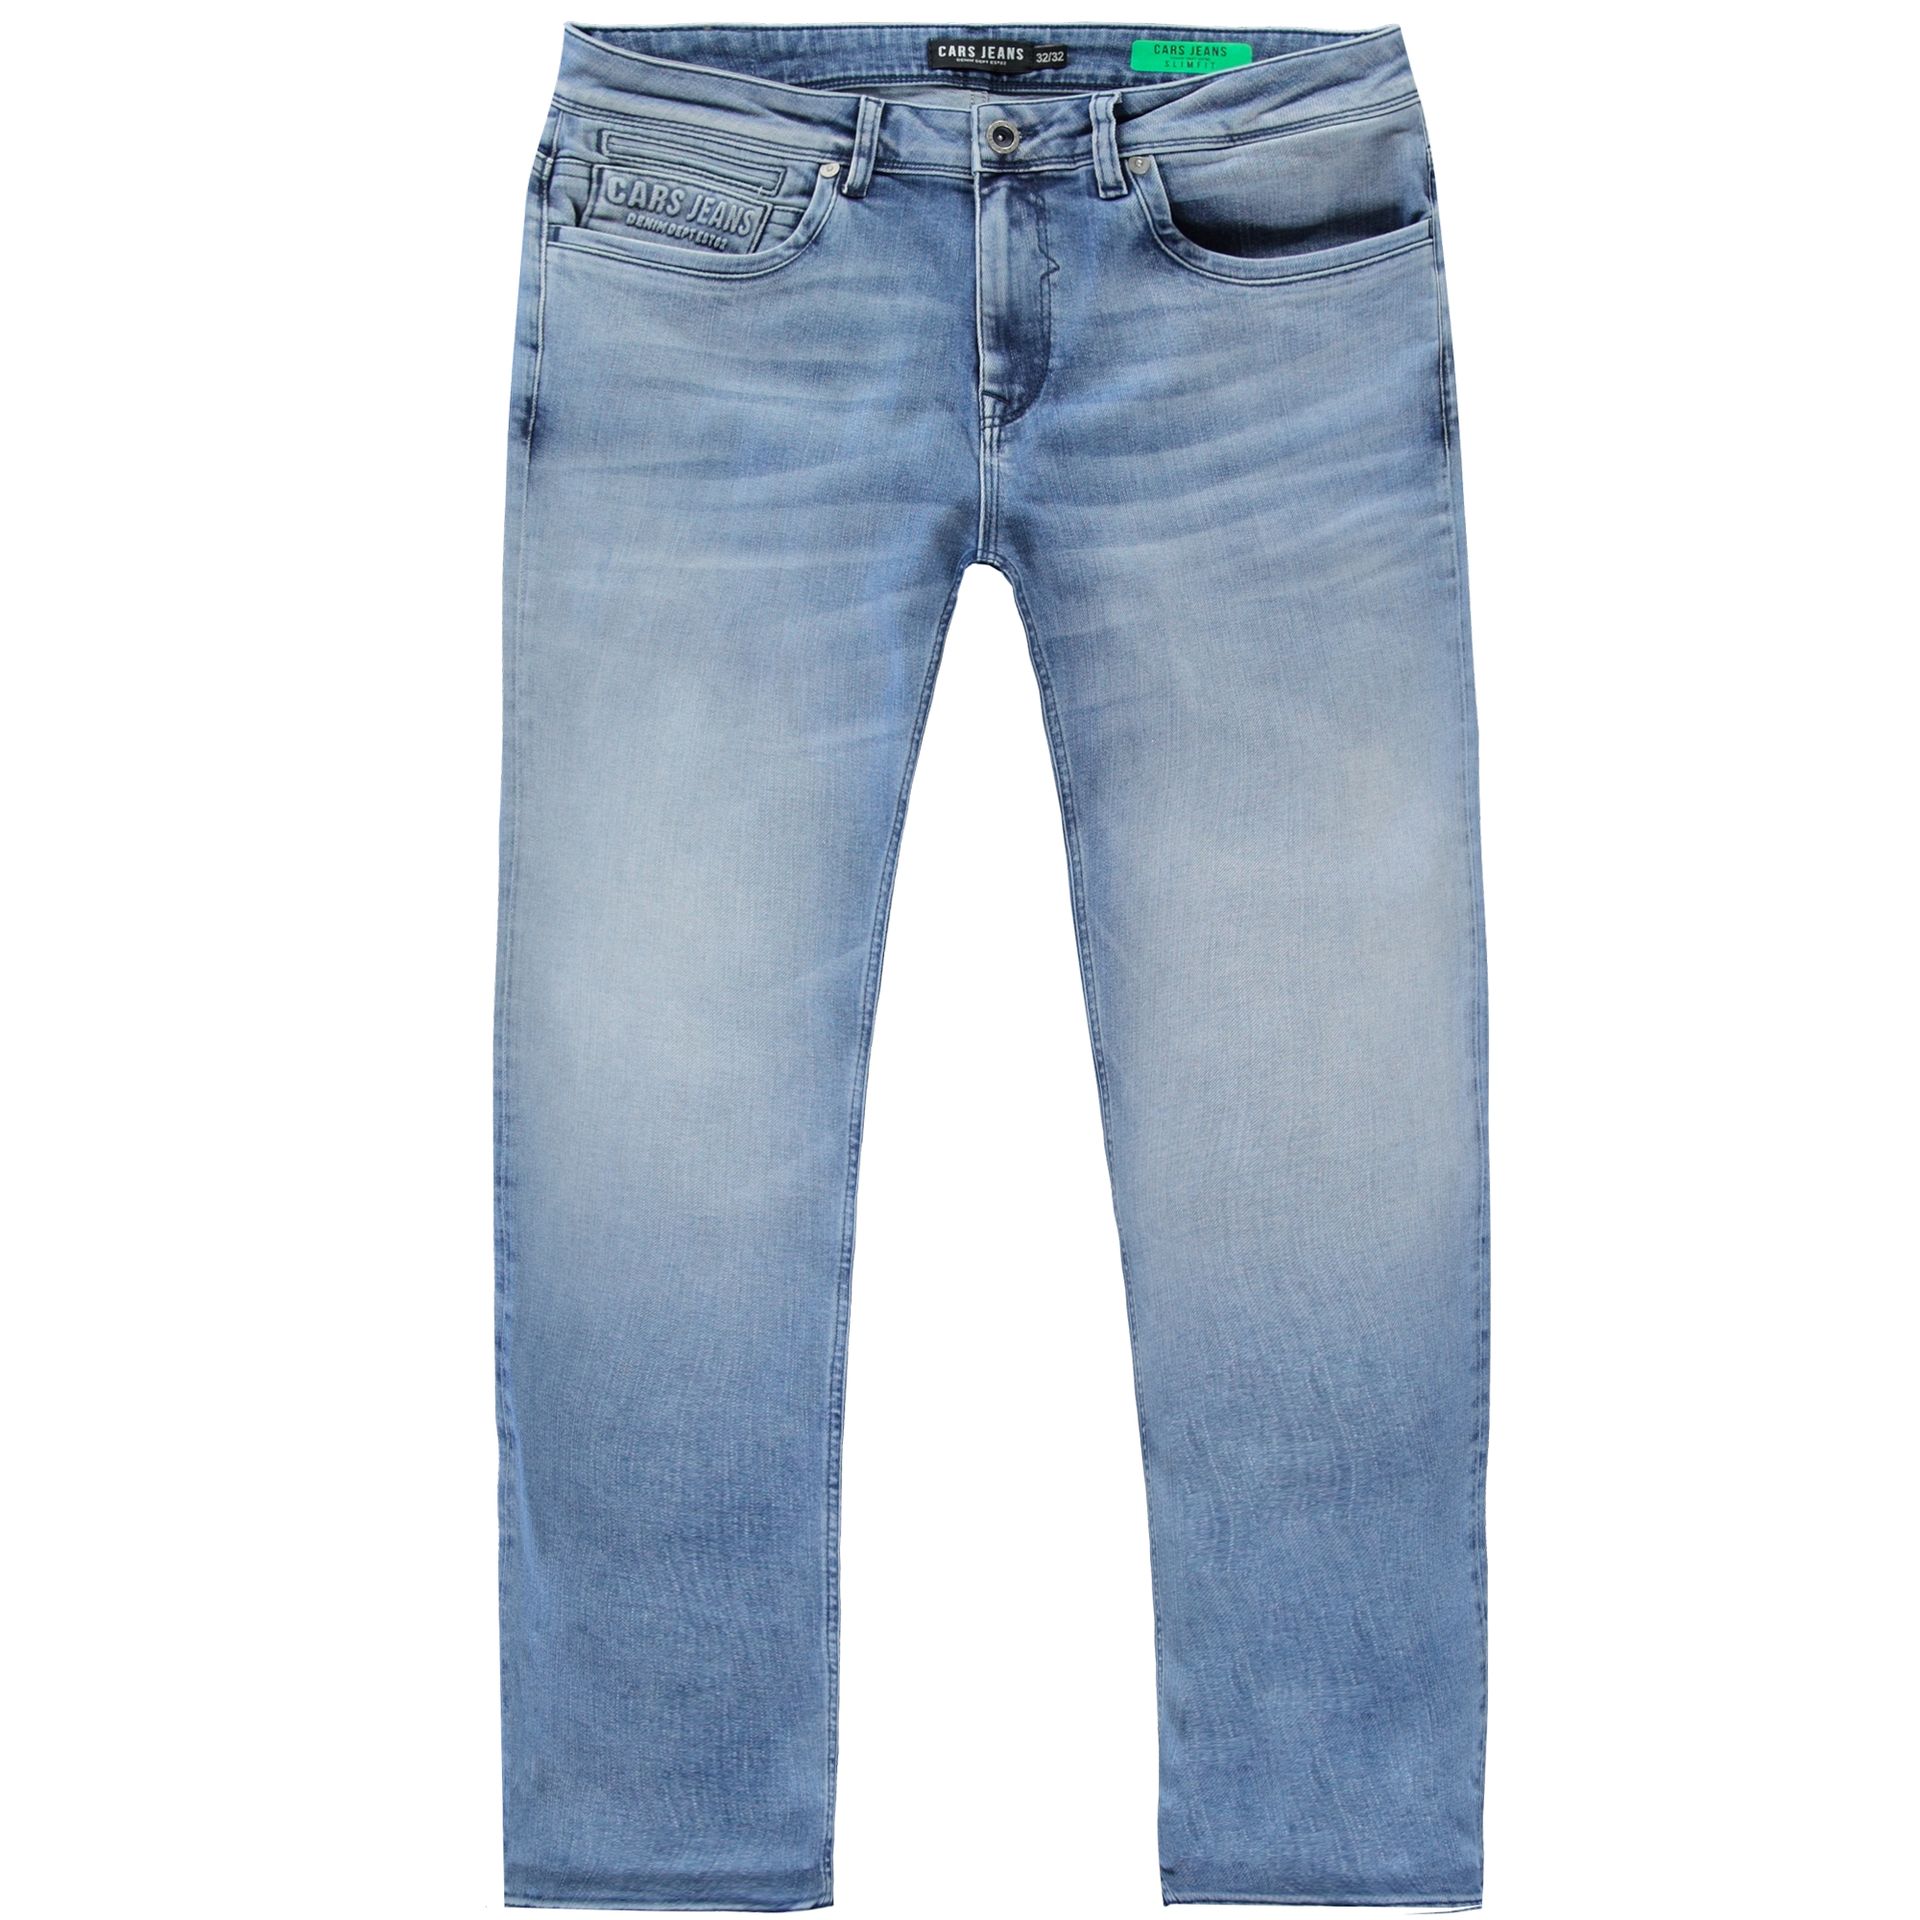 Cars jeans Jeans Blast Slim Fit 95 porto wash 2900147111615